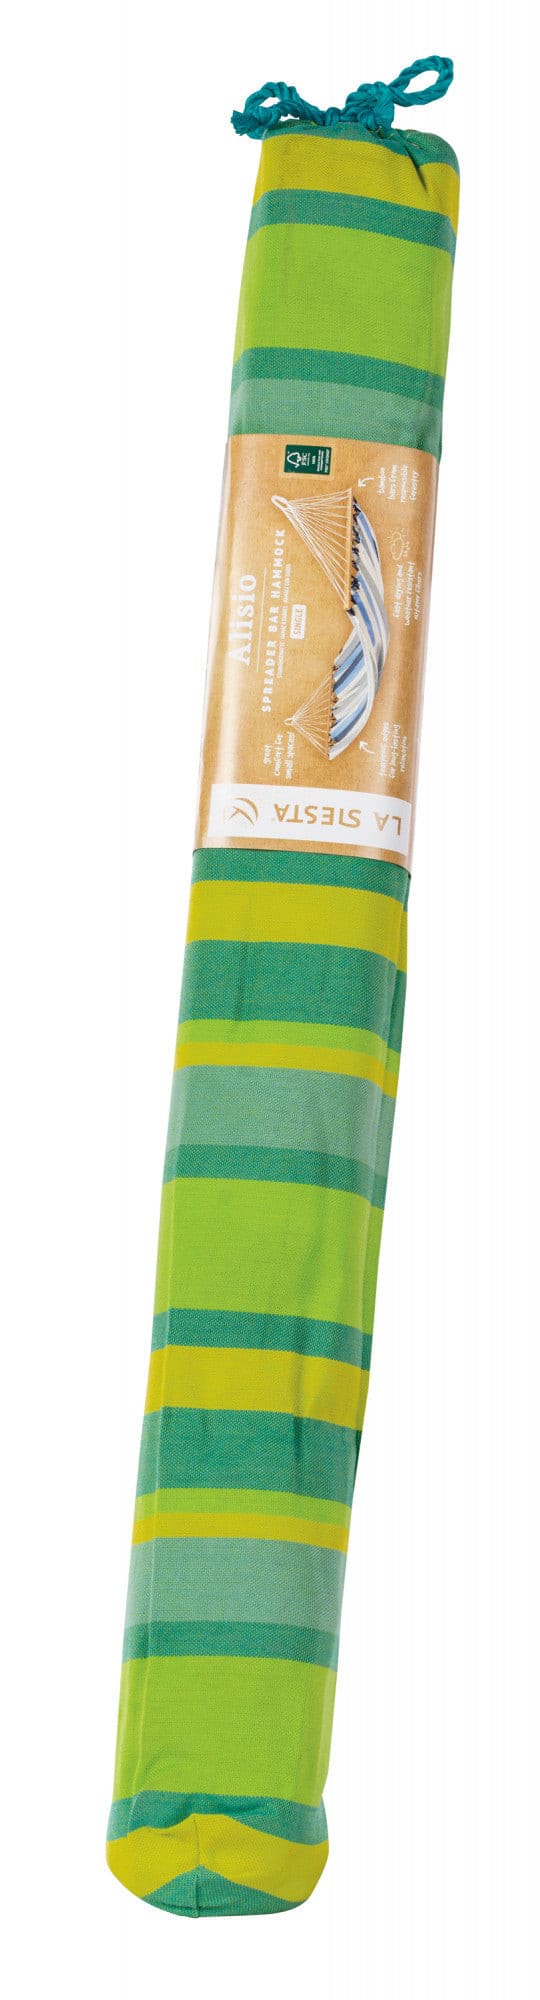 Alisio Lime - Amaca a bastone singola outdoor